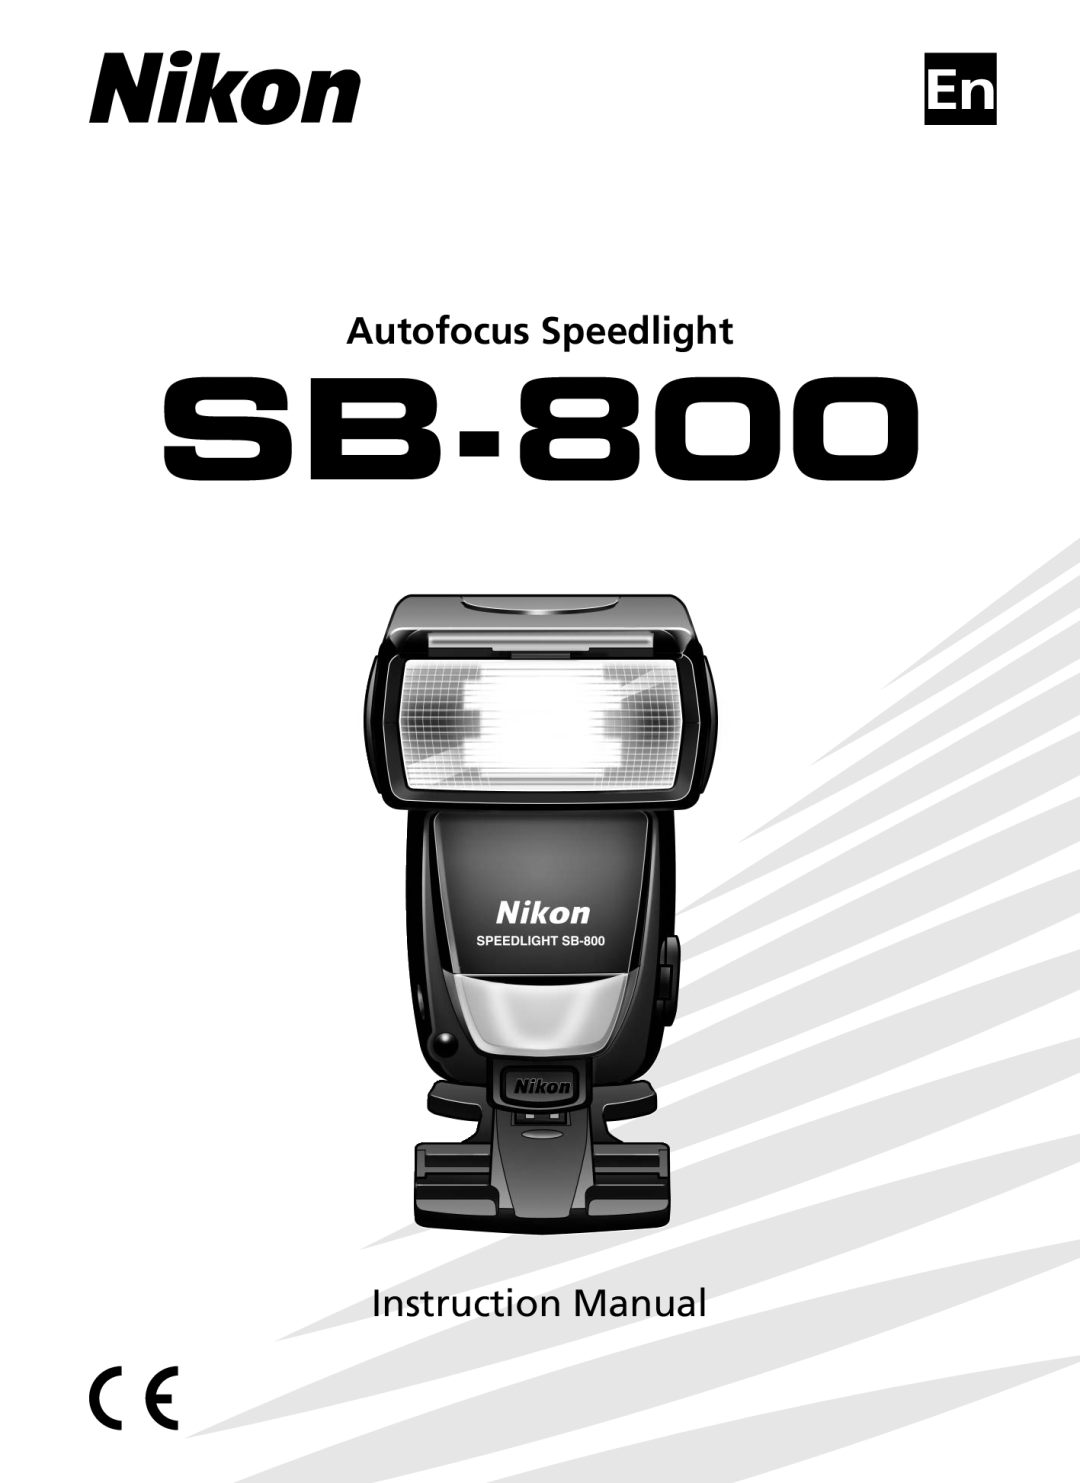 Nikon SB-800 instruction manual Autofocus Speedlight, Instruction Manual 